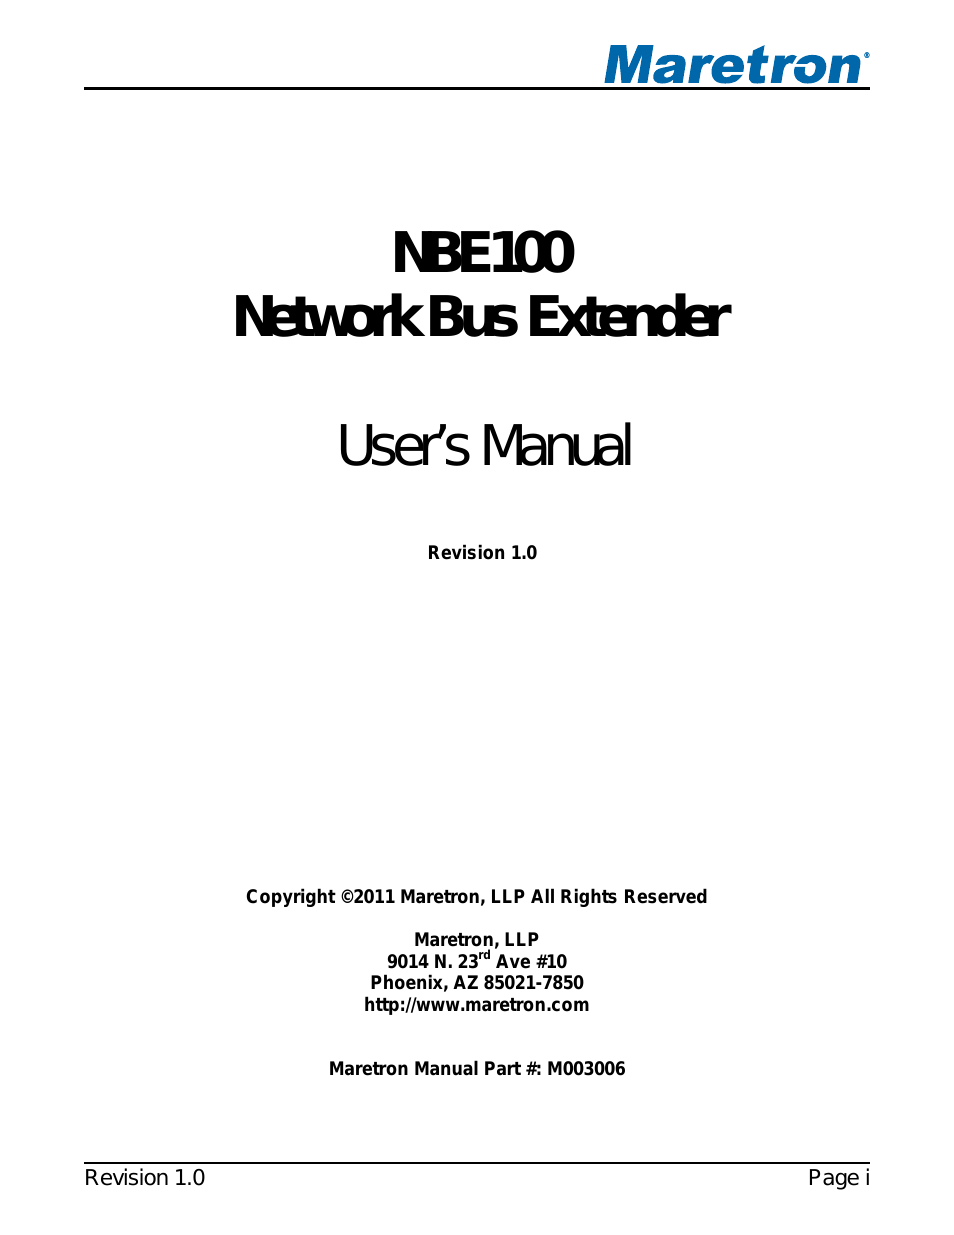 NETWORK BUS EXTENDER NBE100